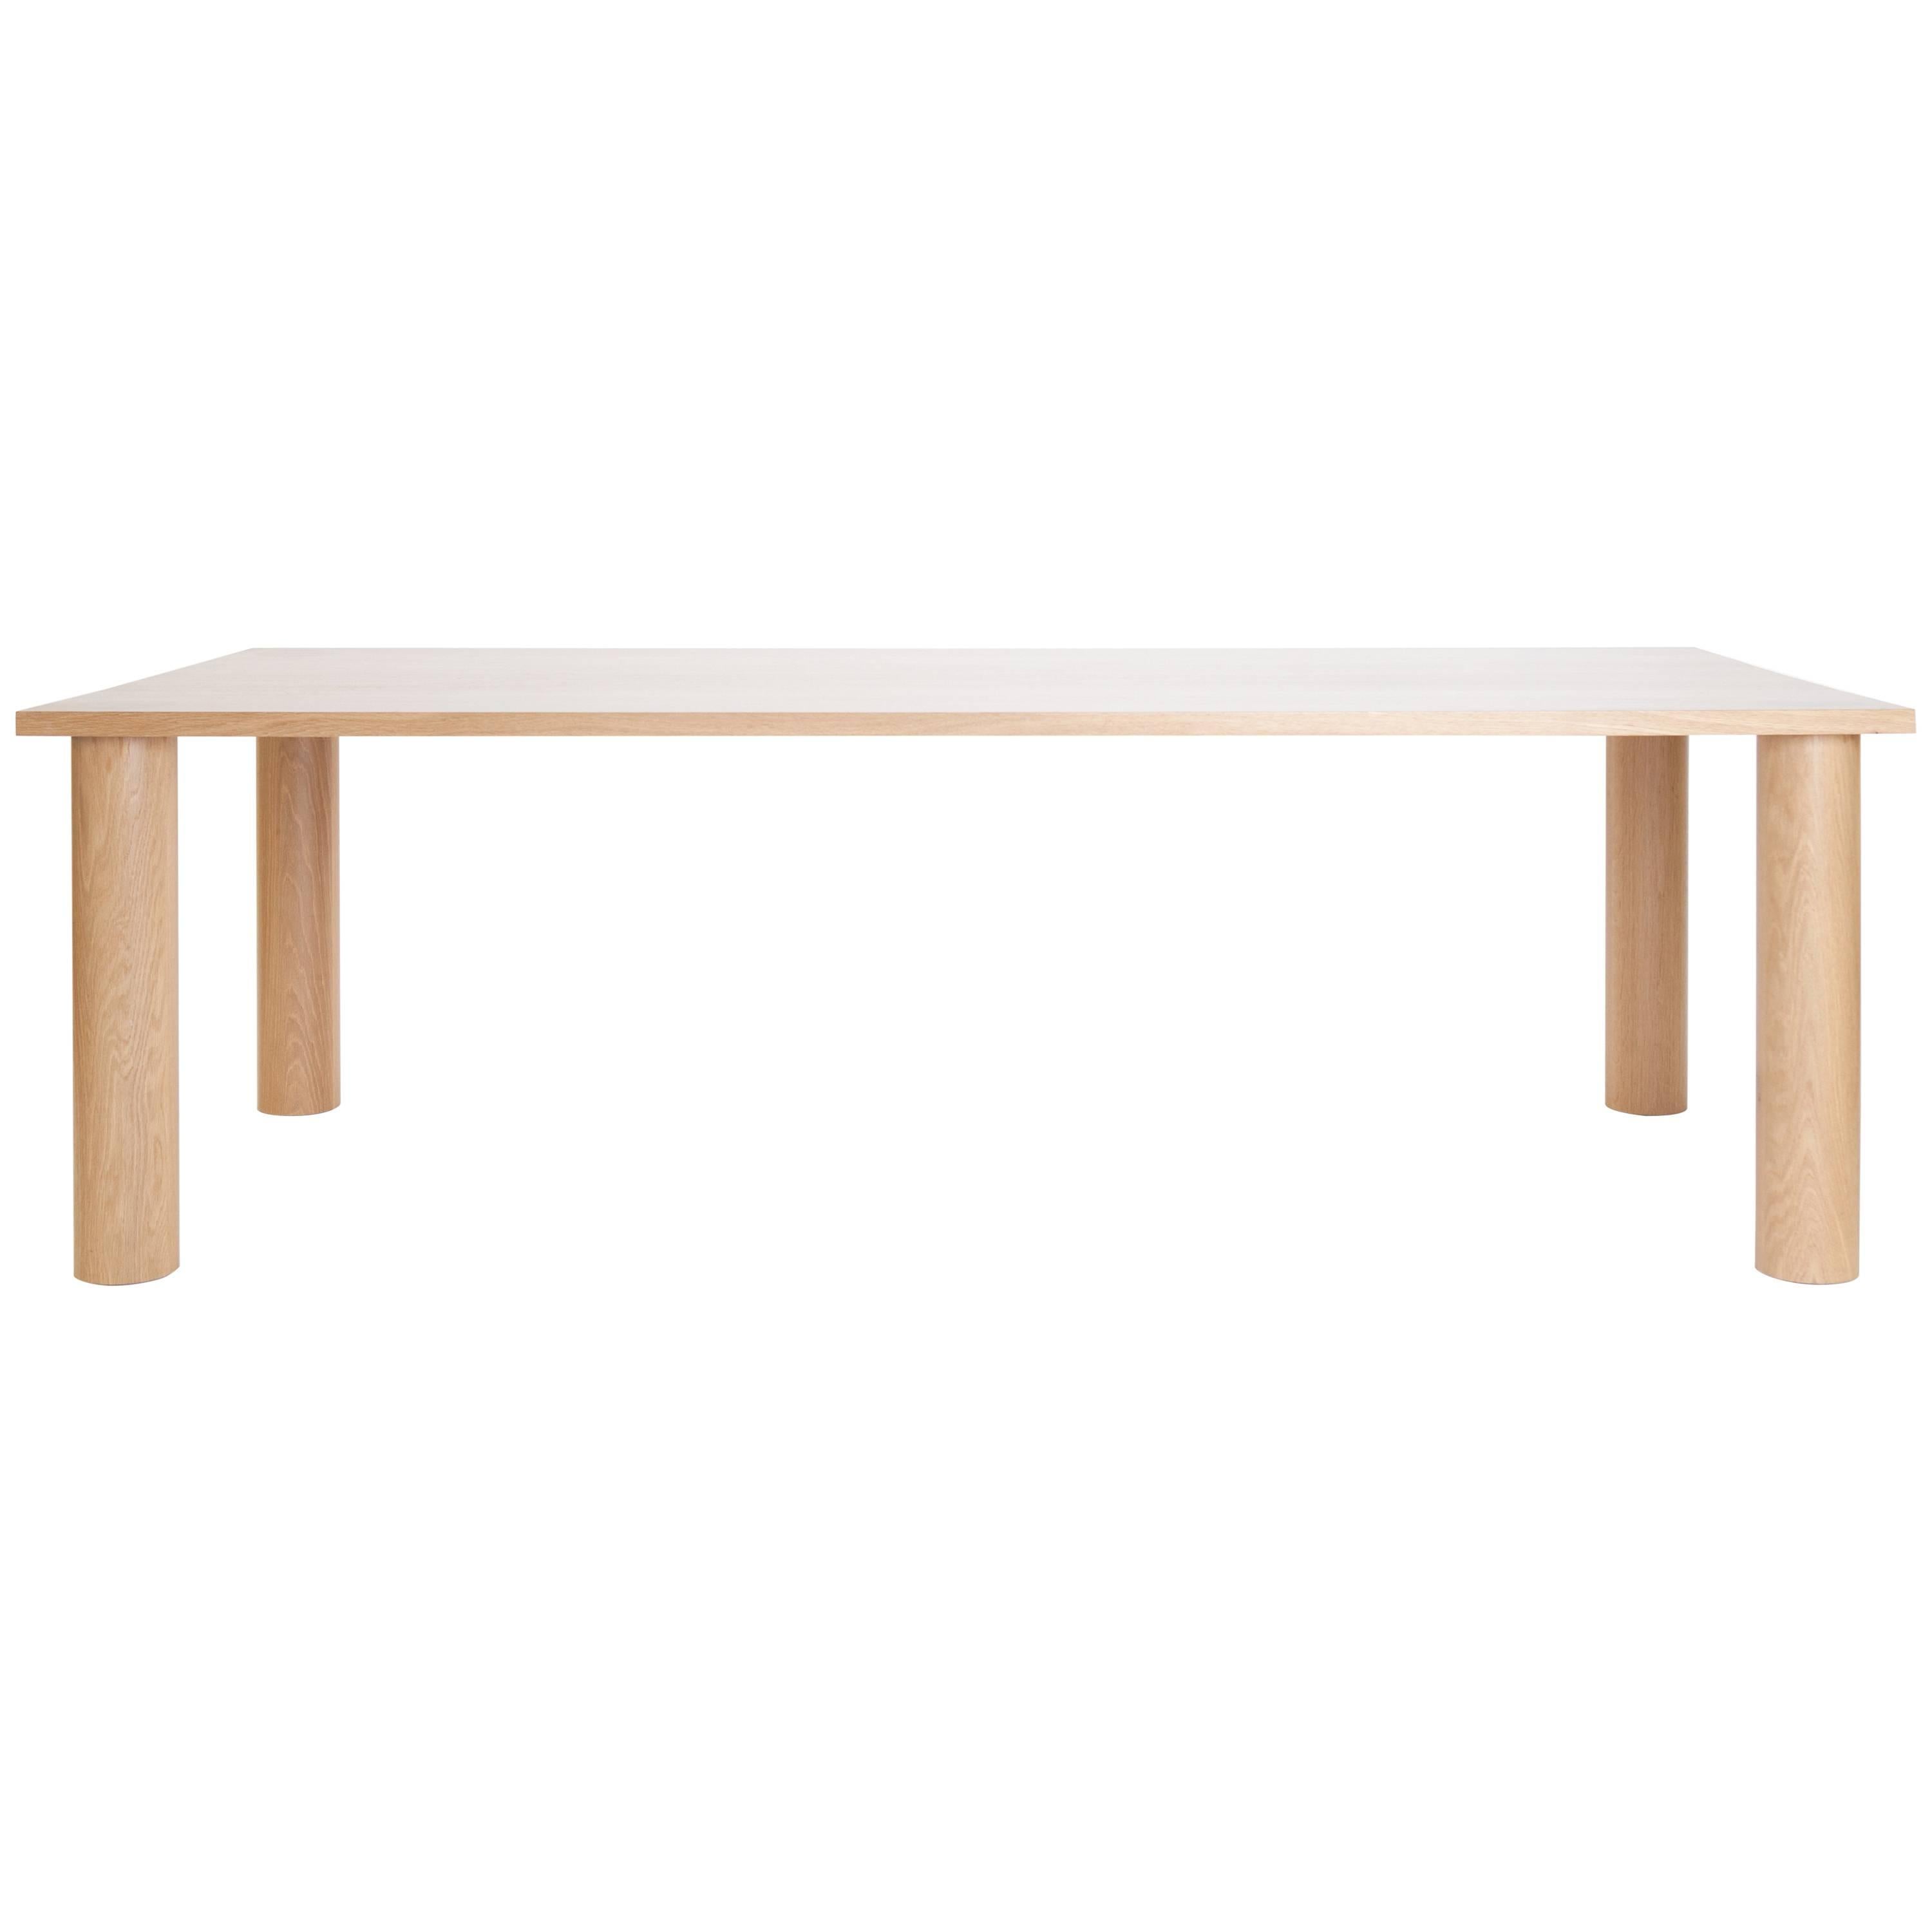 UNA Modern Dining Table in Solid White Oak by Estudio Persona